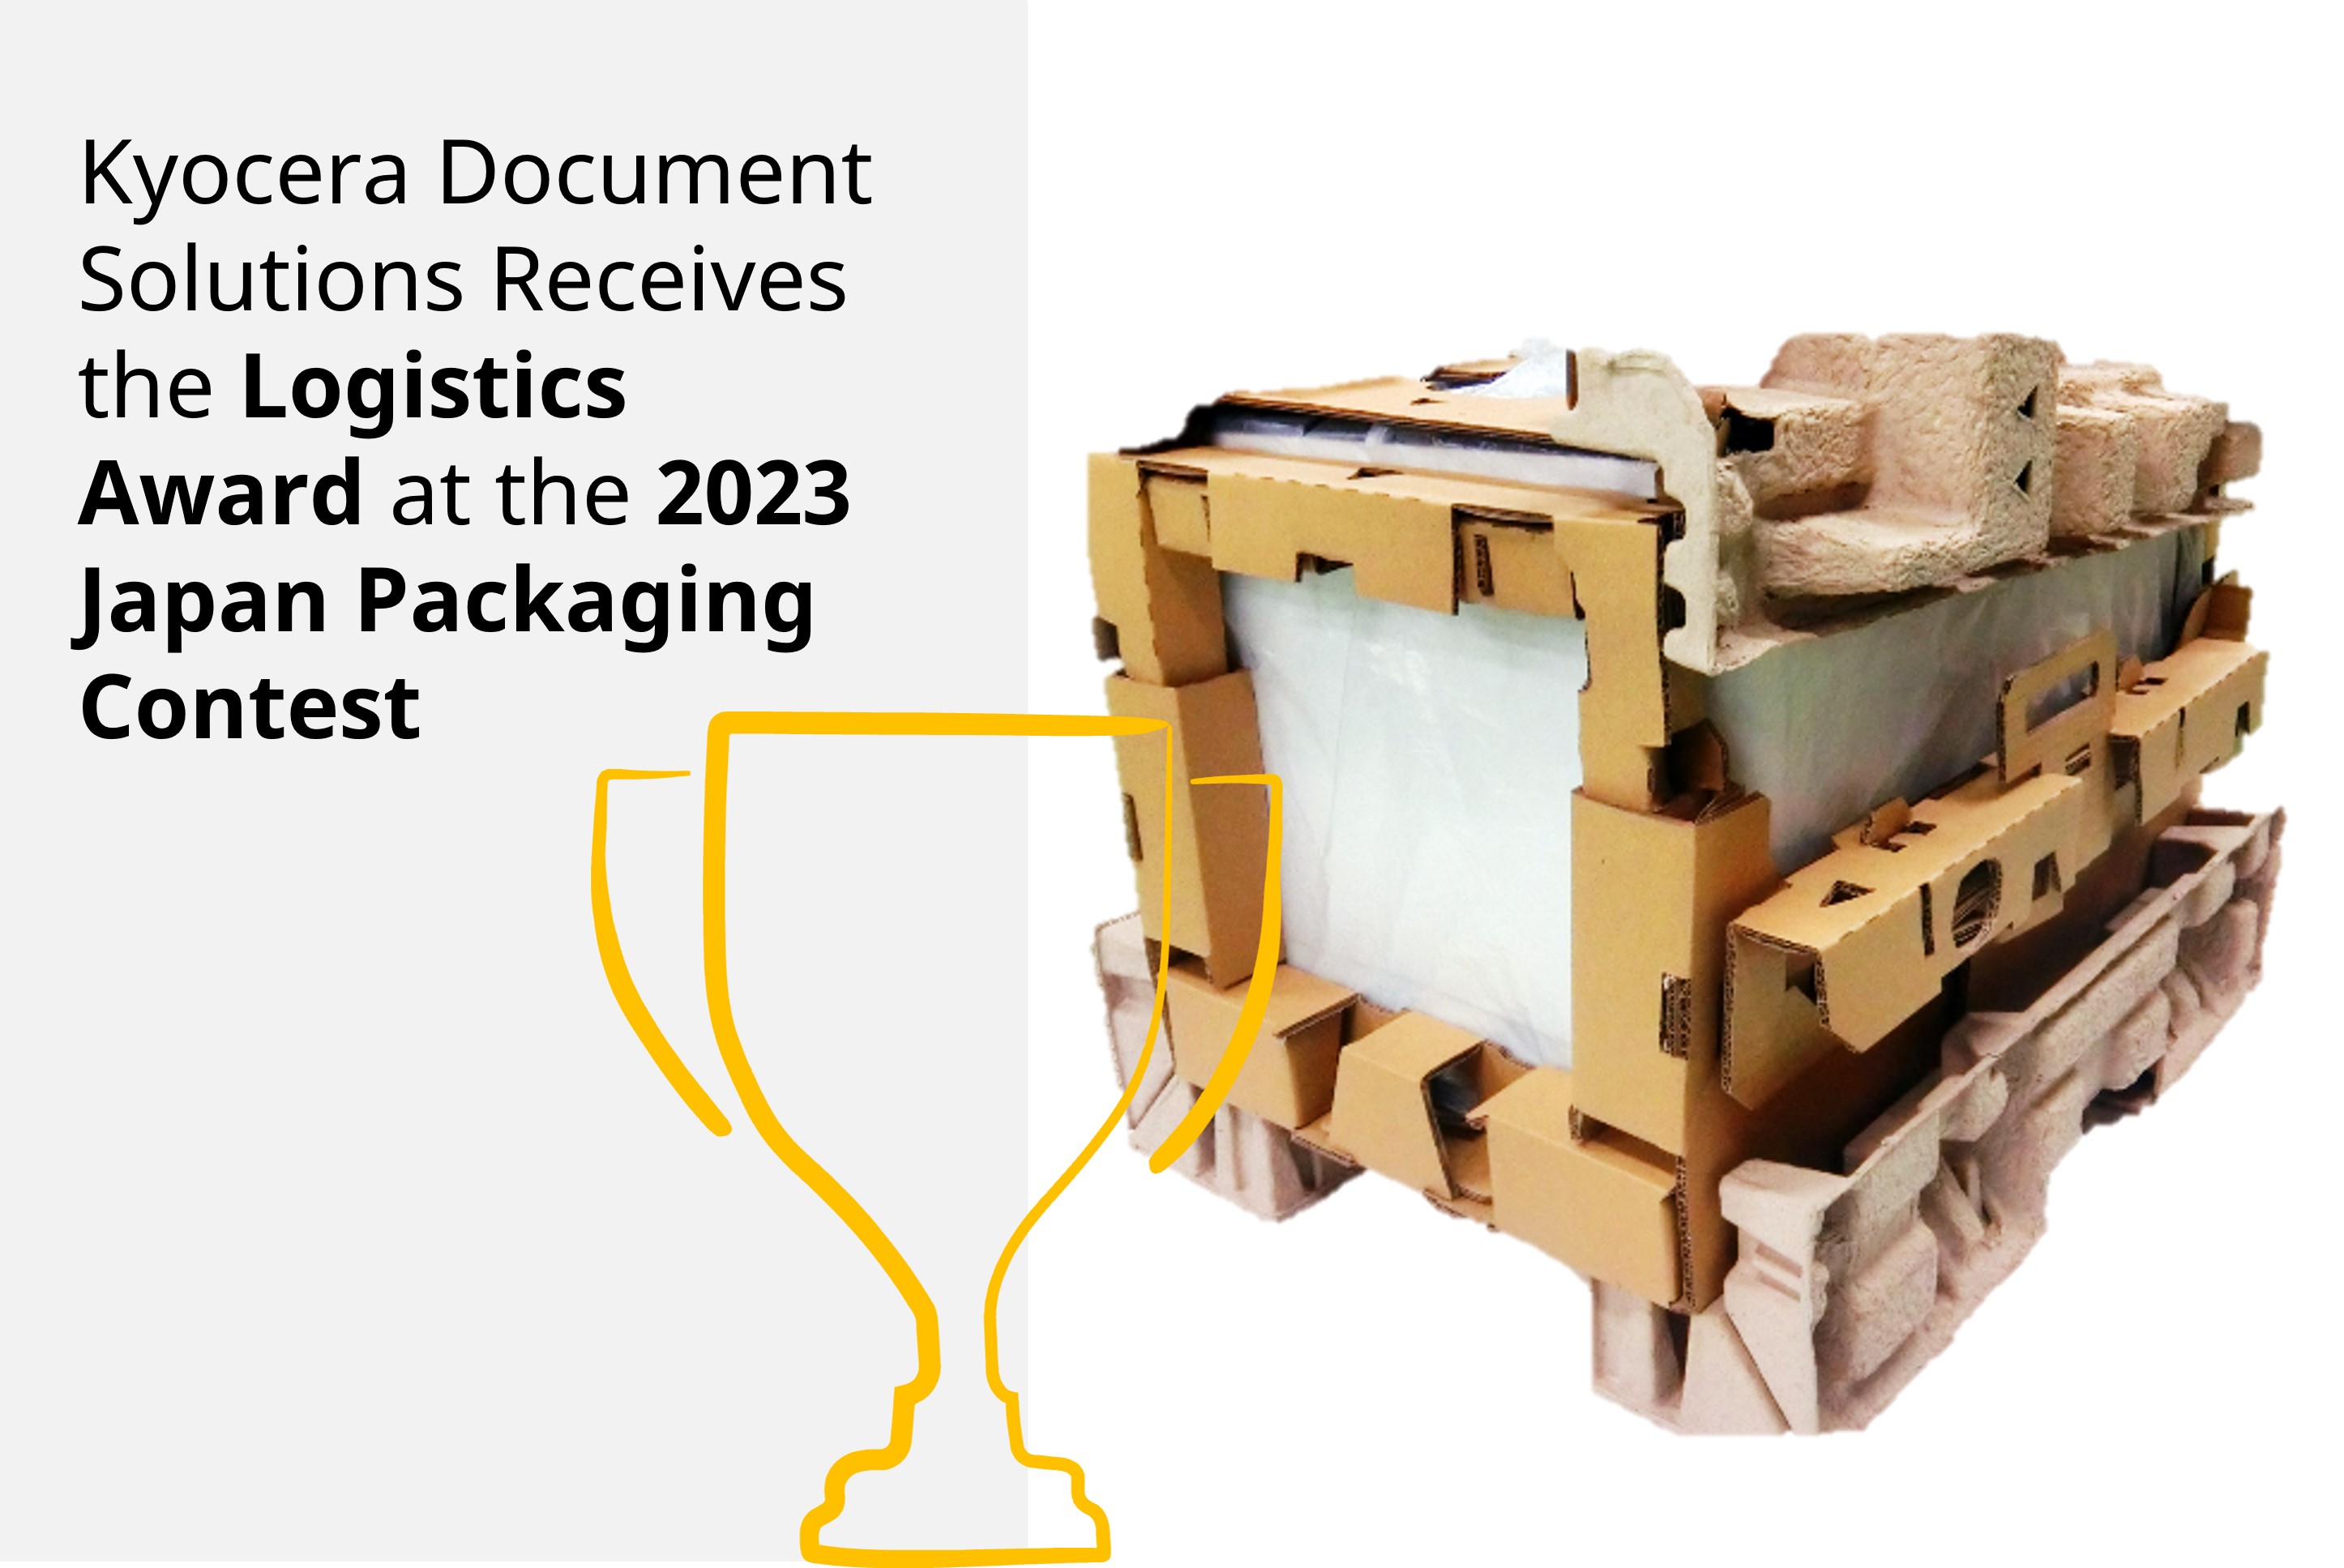 >Kyocera Document Solutions, 2023 일본 패키징 콘테스트에서 물류 부문 수상